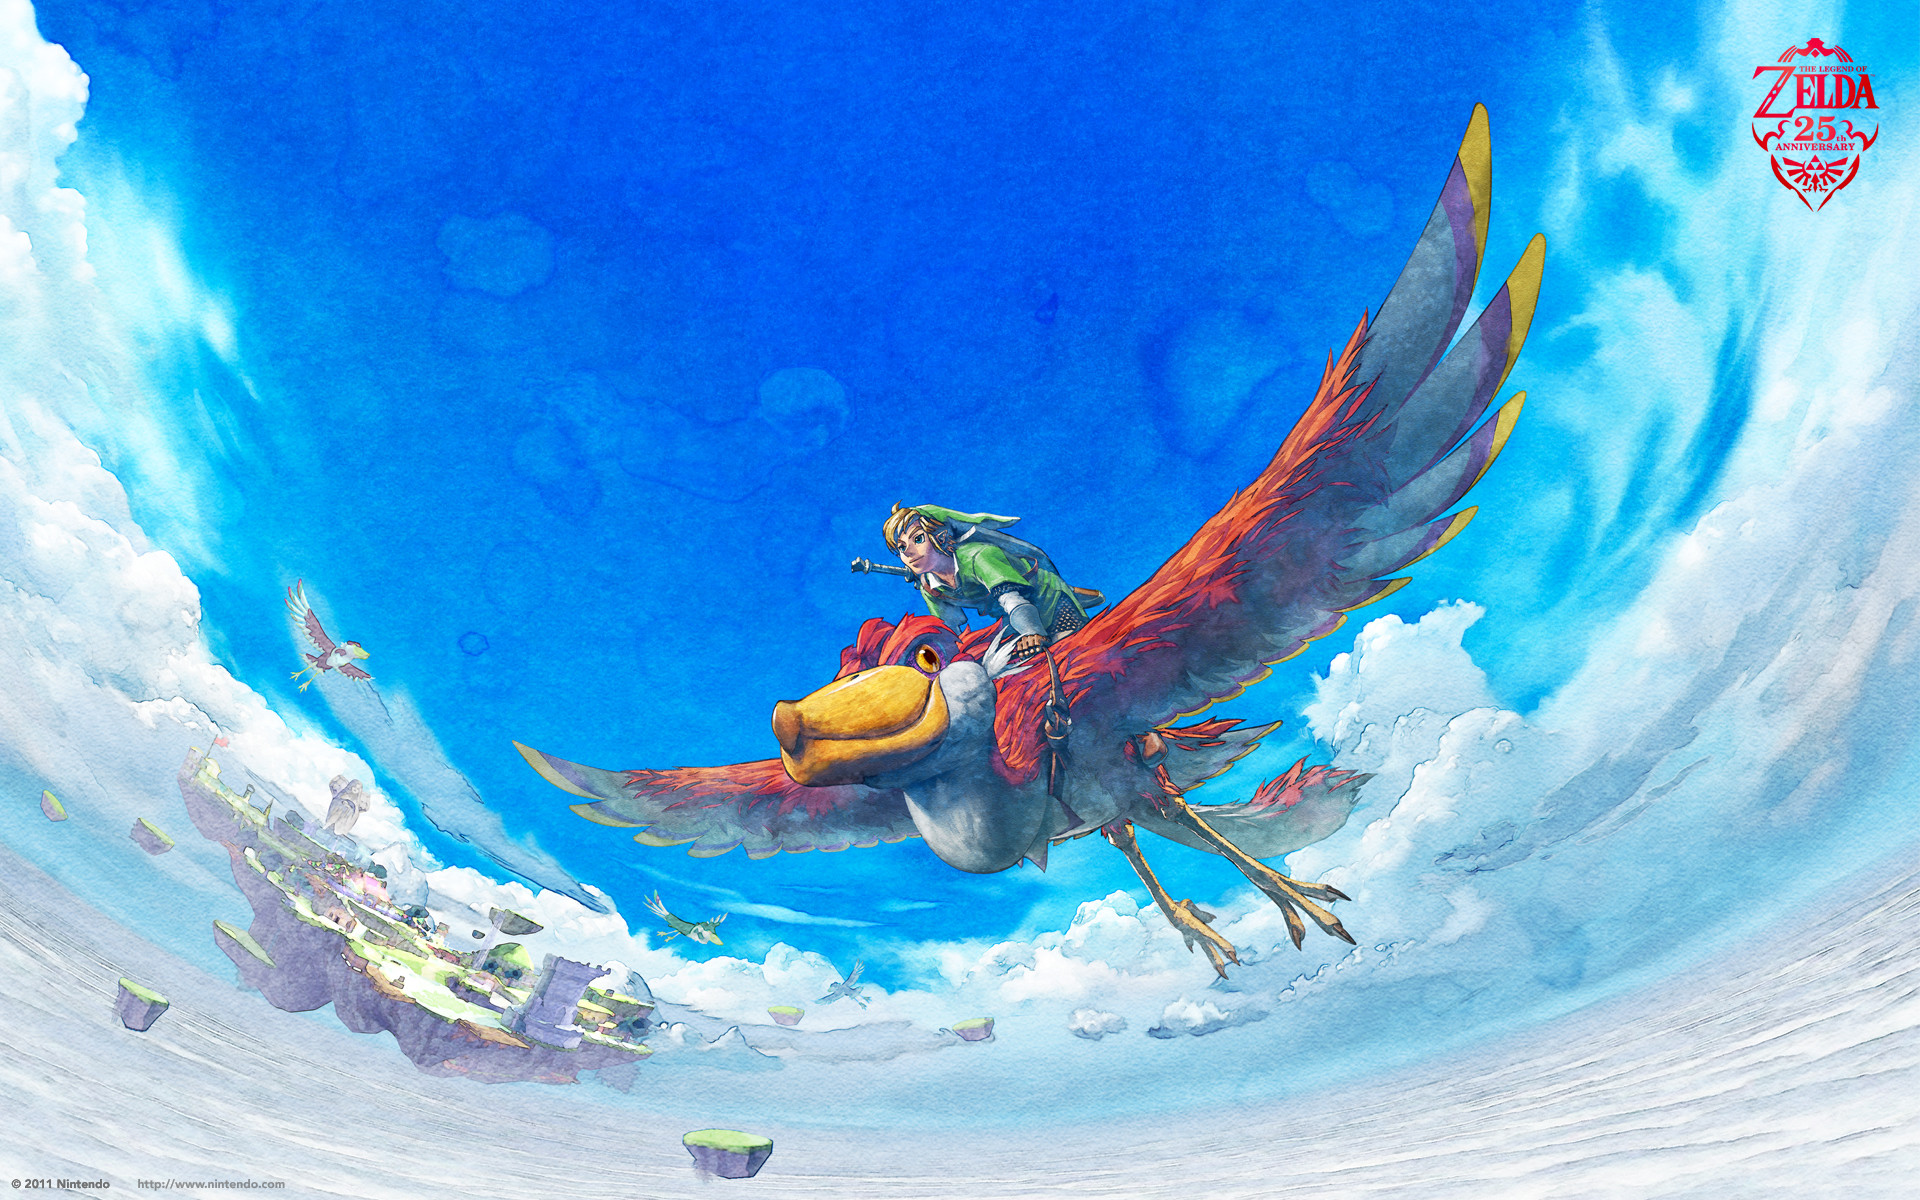 1920x1200 The Legend of Zelda Wallpaper (Skyward Sword) – Bird and Link Soar In the  Sky and Clouds